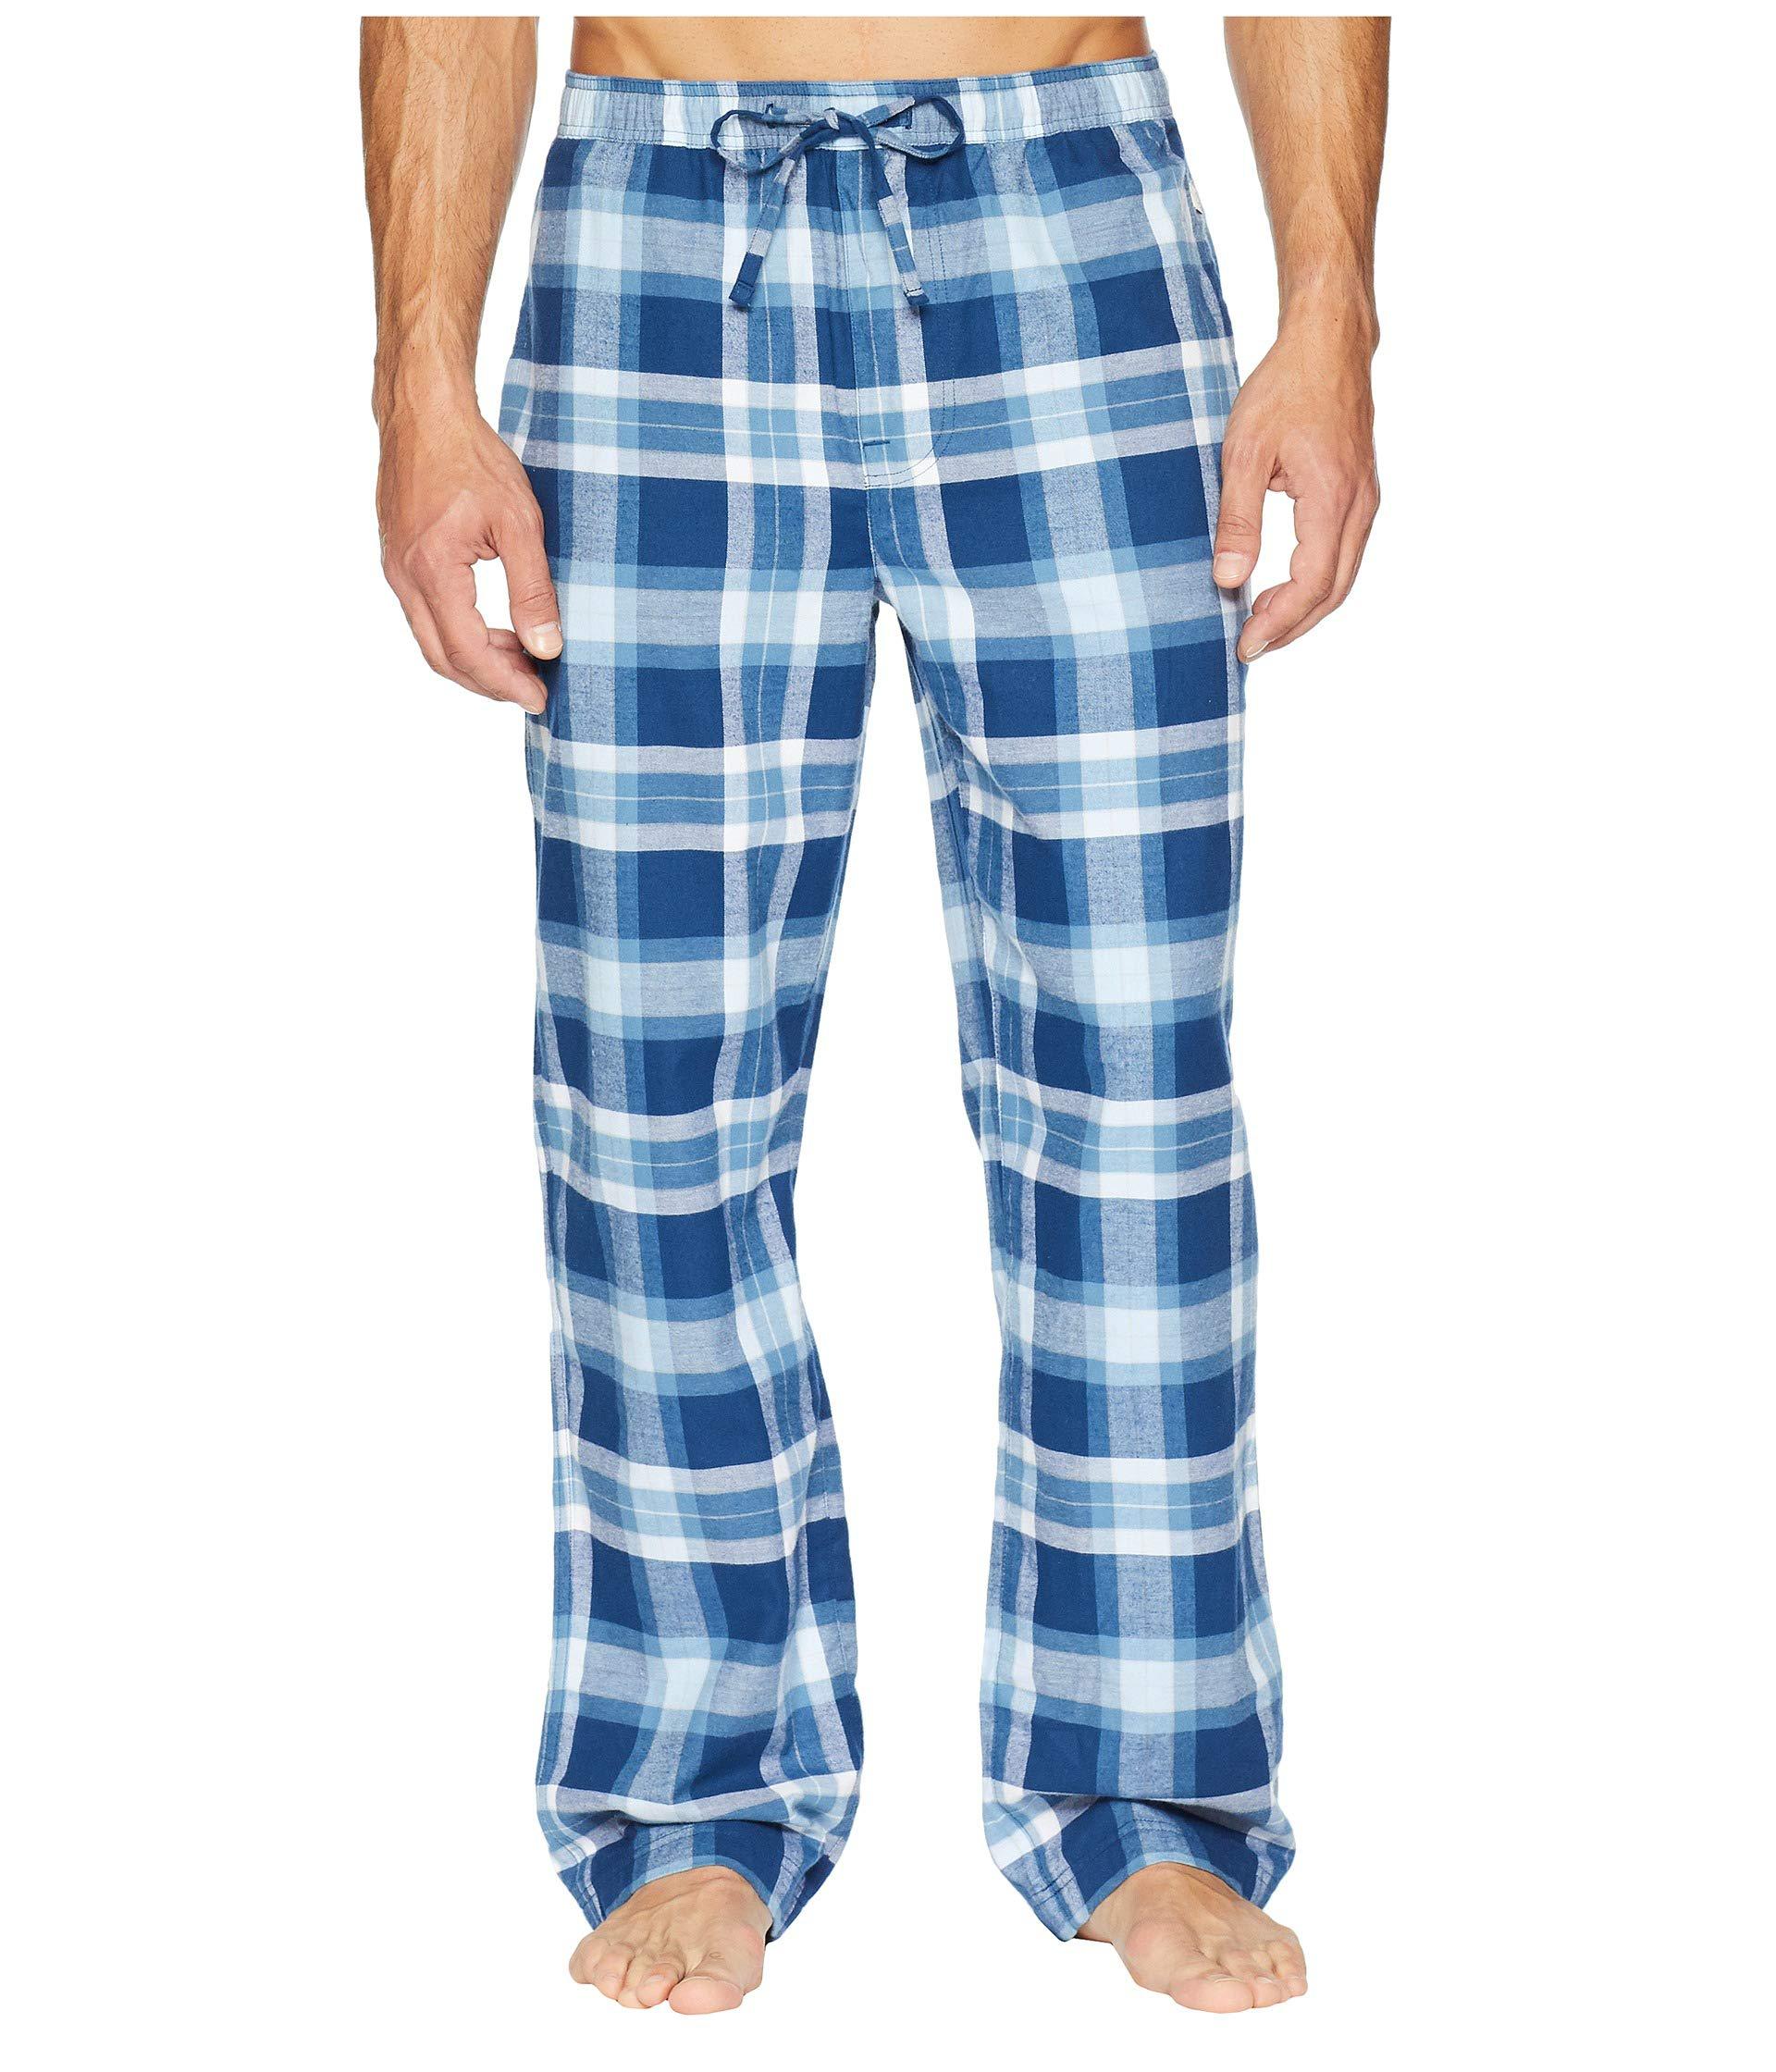 Lyst - Life Is Good. Classic Sleep Pants (americana Red 1) Men's Pajama ...